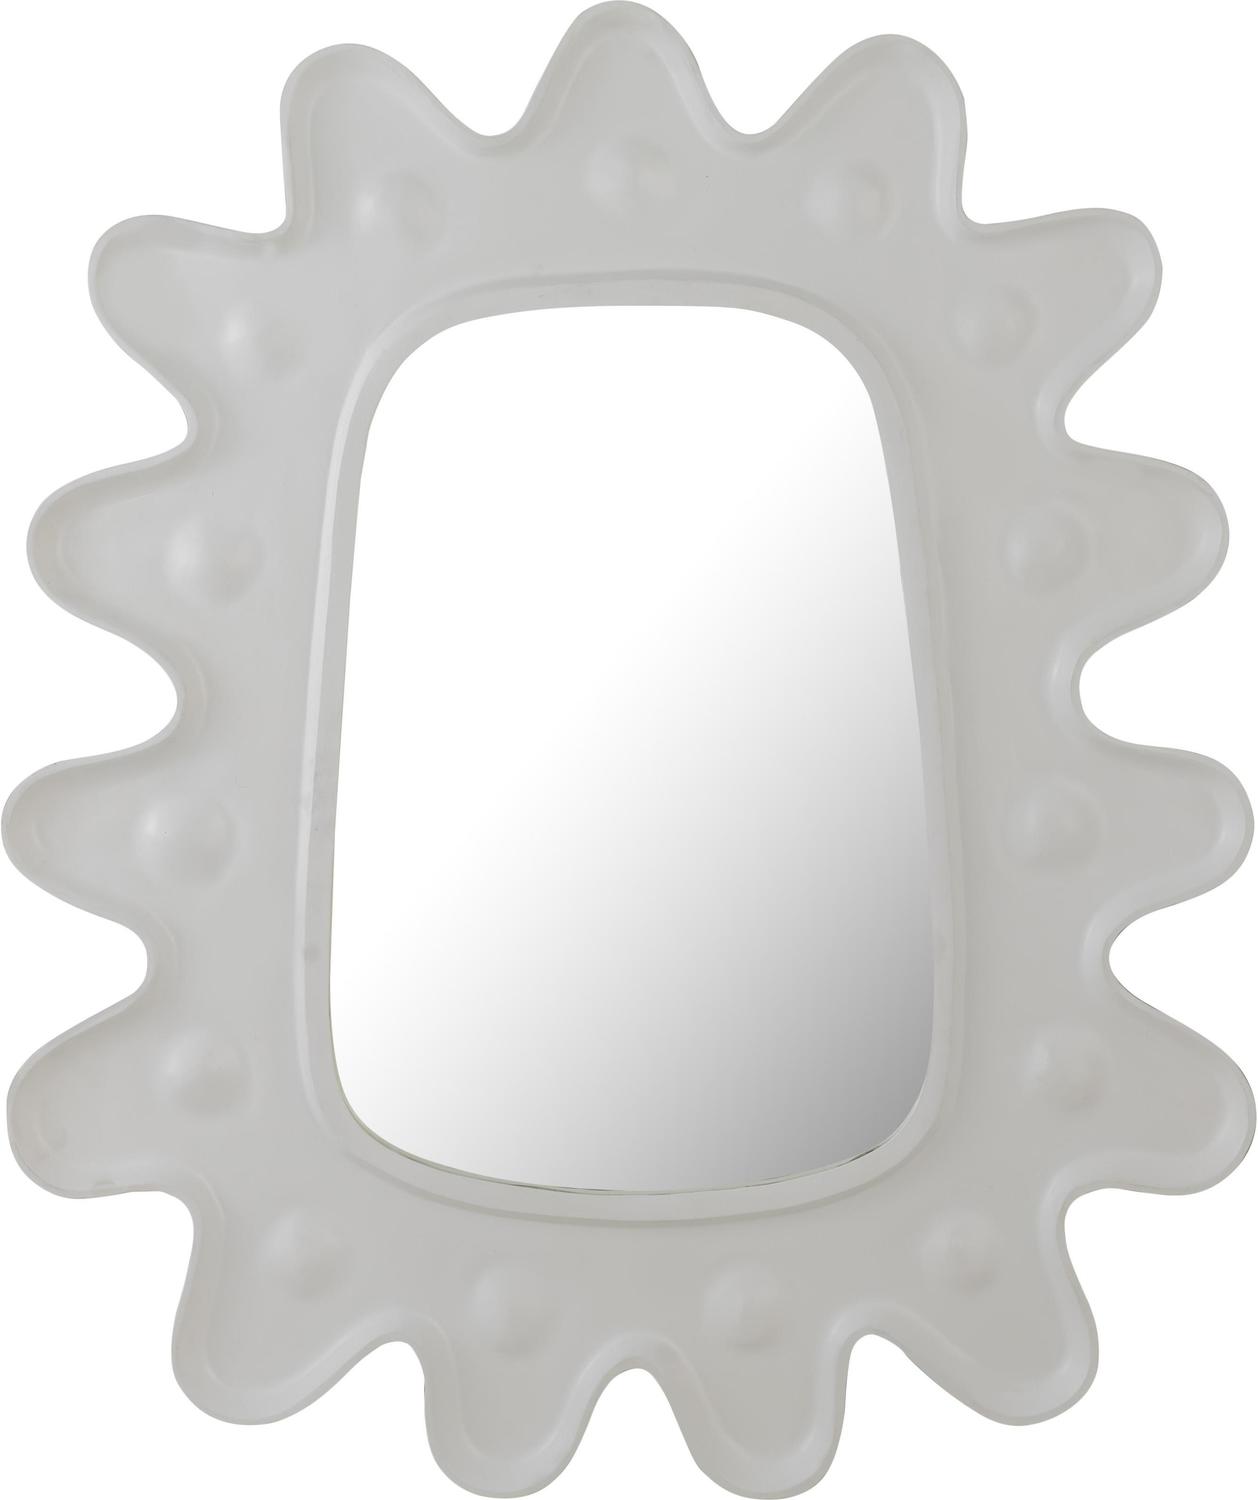 leaning mirror ideas Tov Furniture Mirrors White